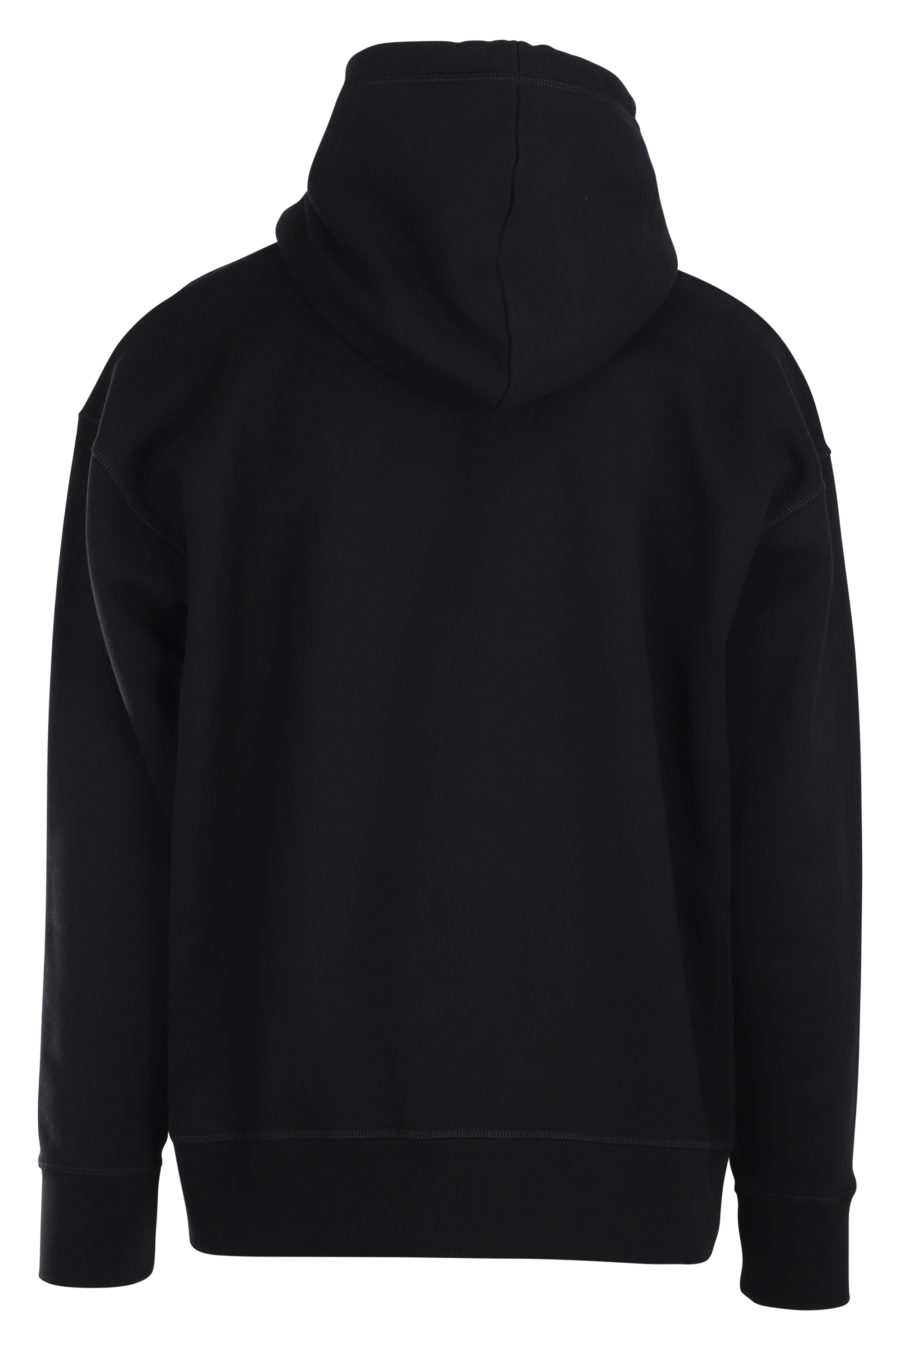 Black hooded sweatshirt with white "bromance" logo - IMG 9898